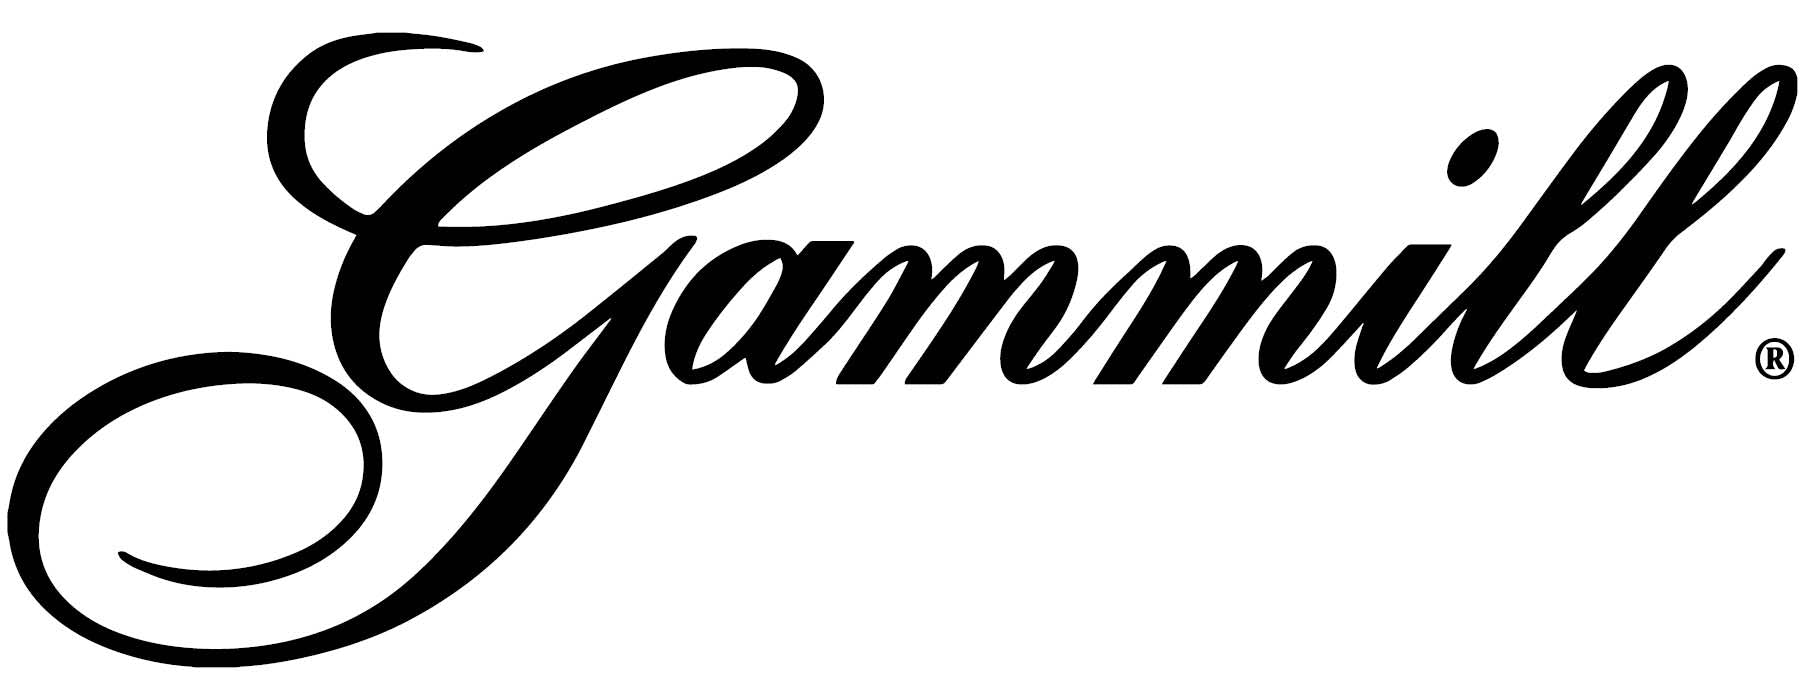 Gammill Clearance